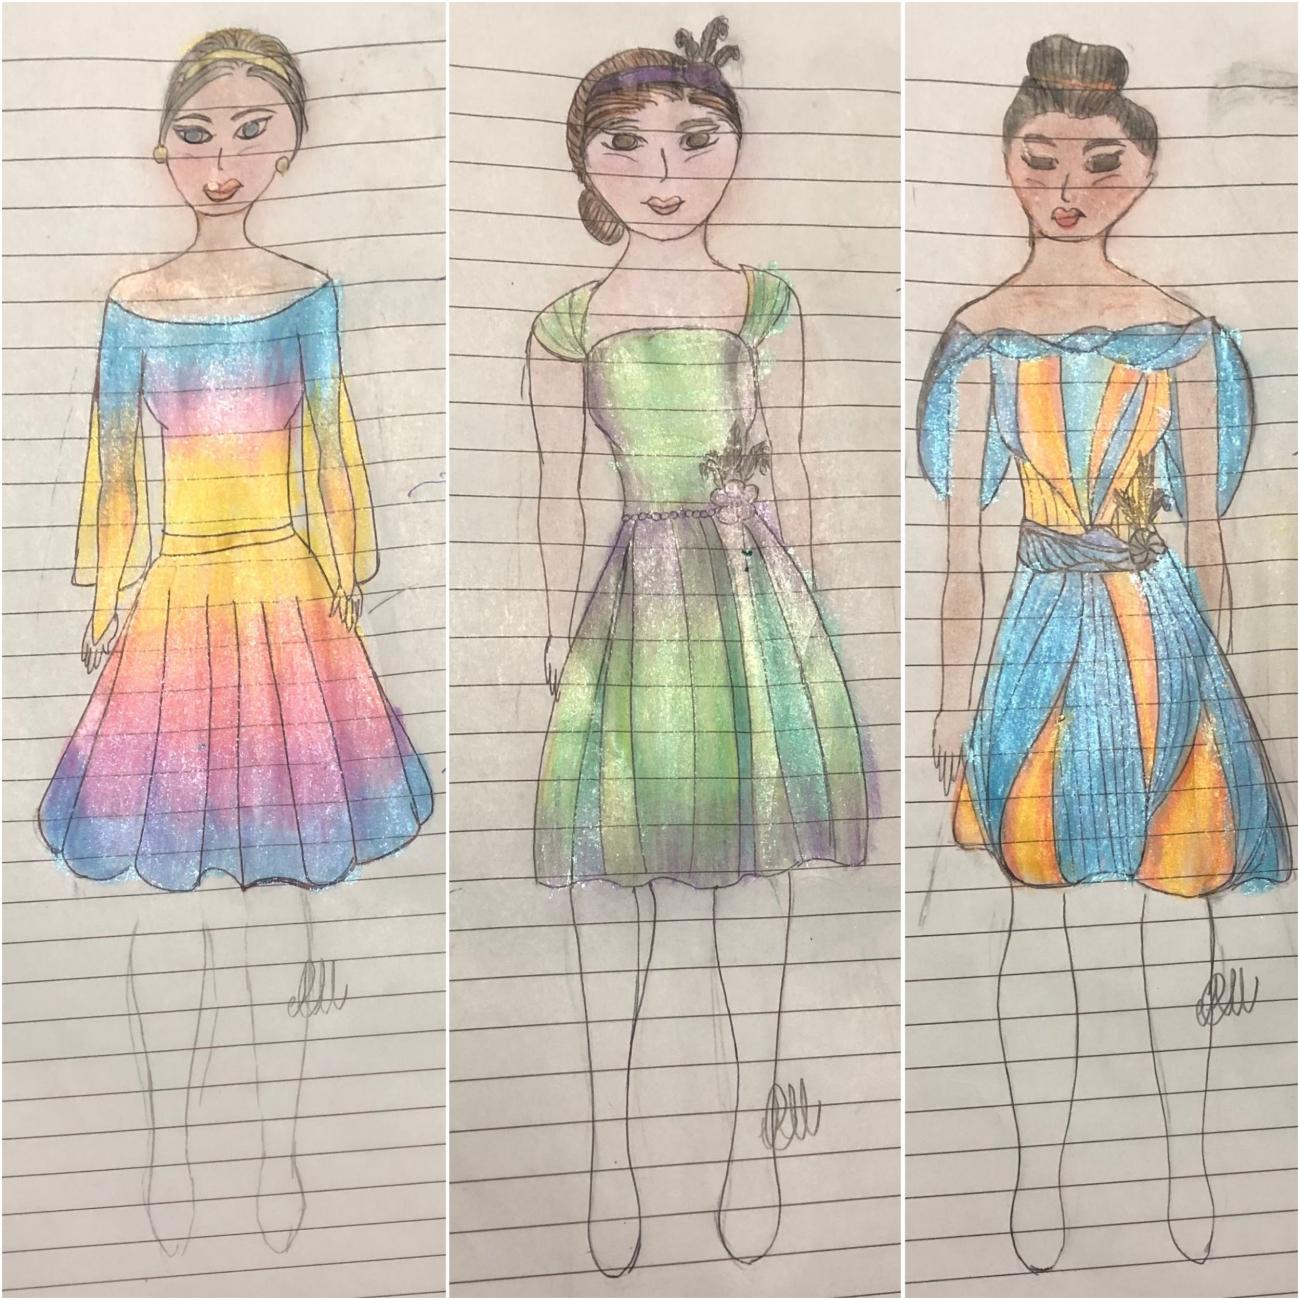 Three illustrations of colourful dresses